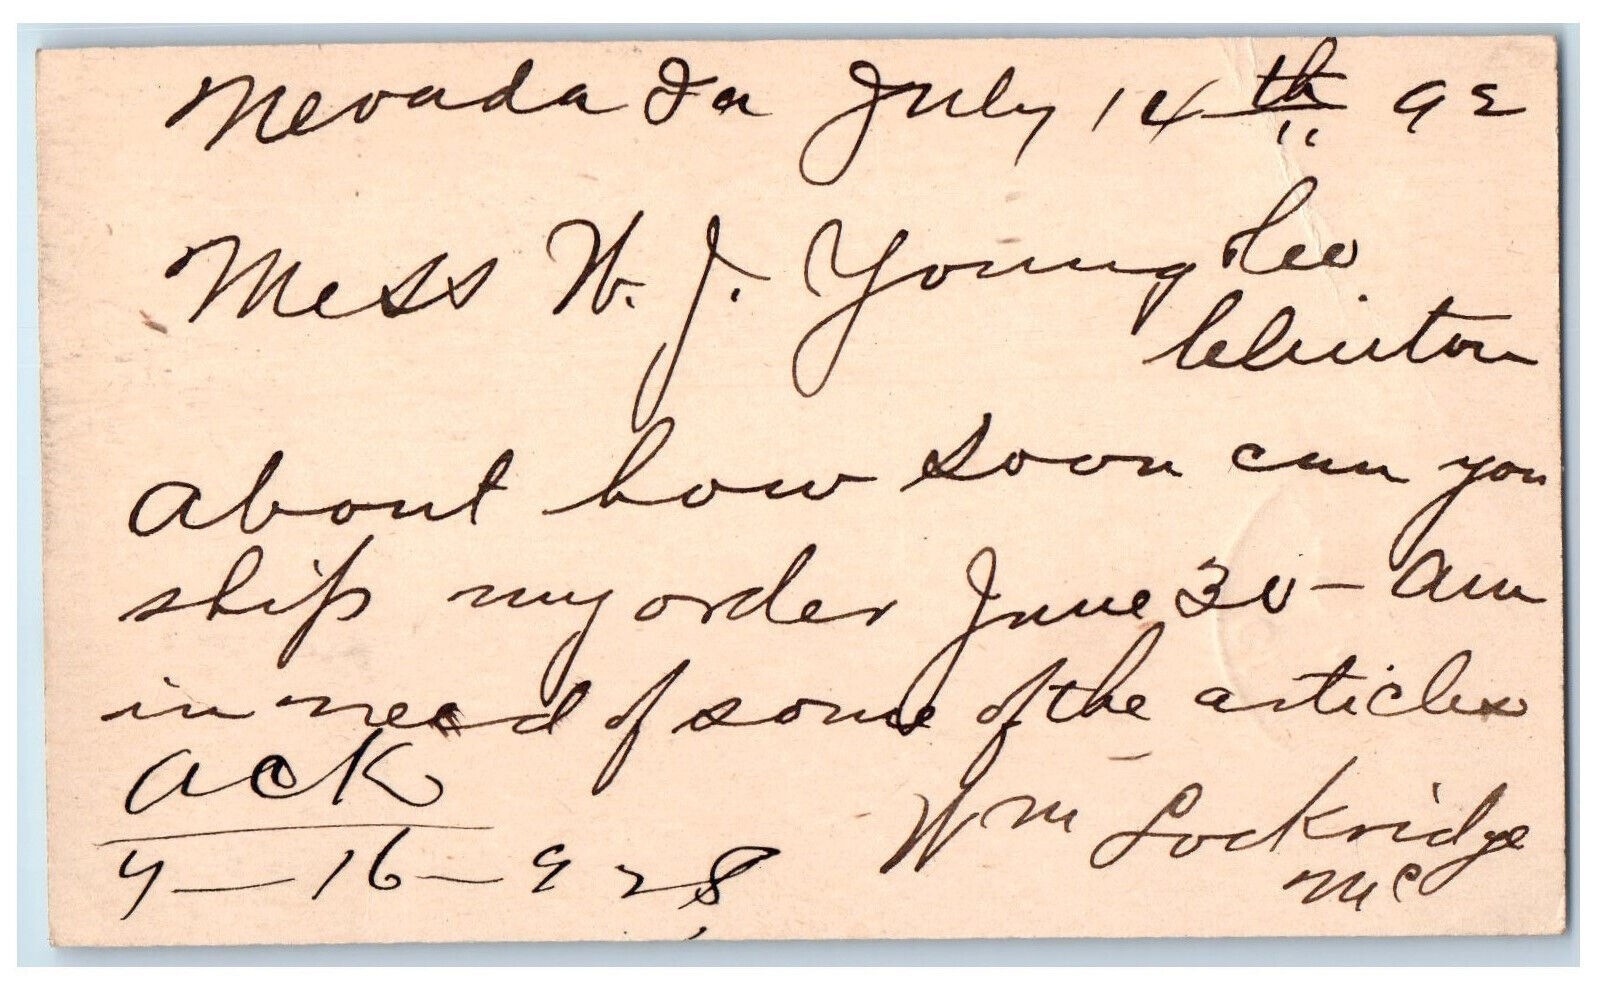 1892 WJ Young and Co WM Lockridge Nevada Iowa IA Clinton Iowa IA Postal Card